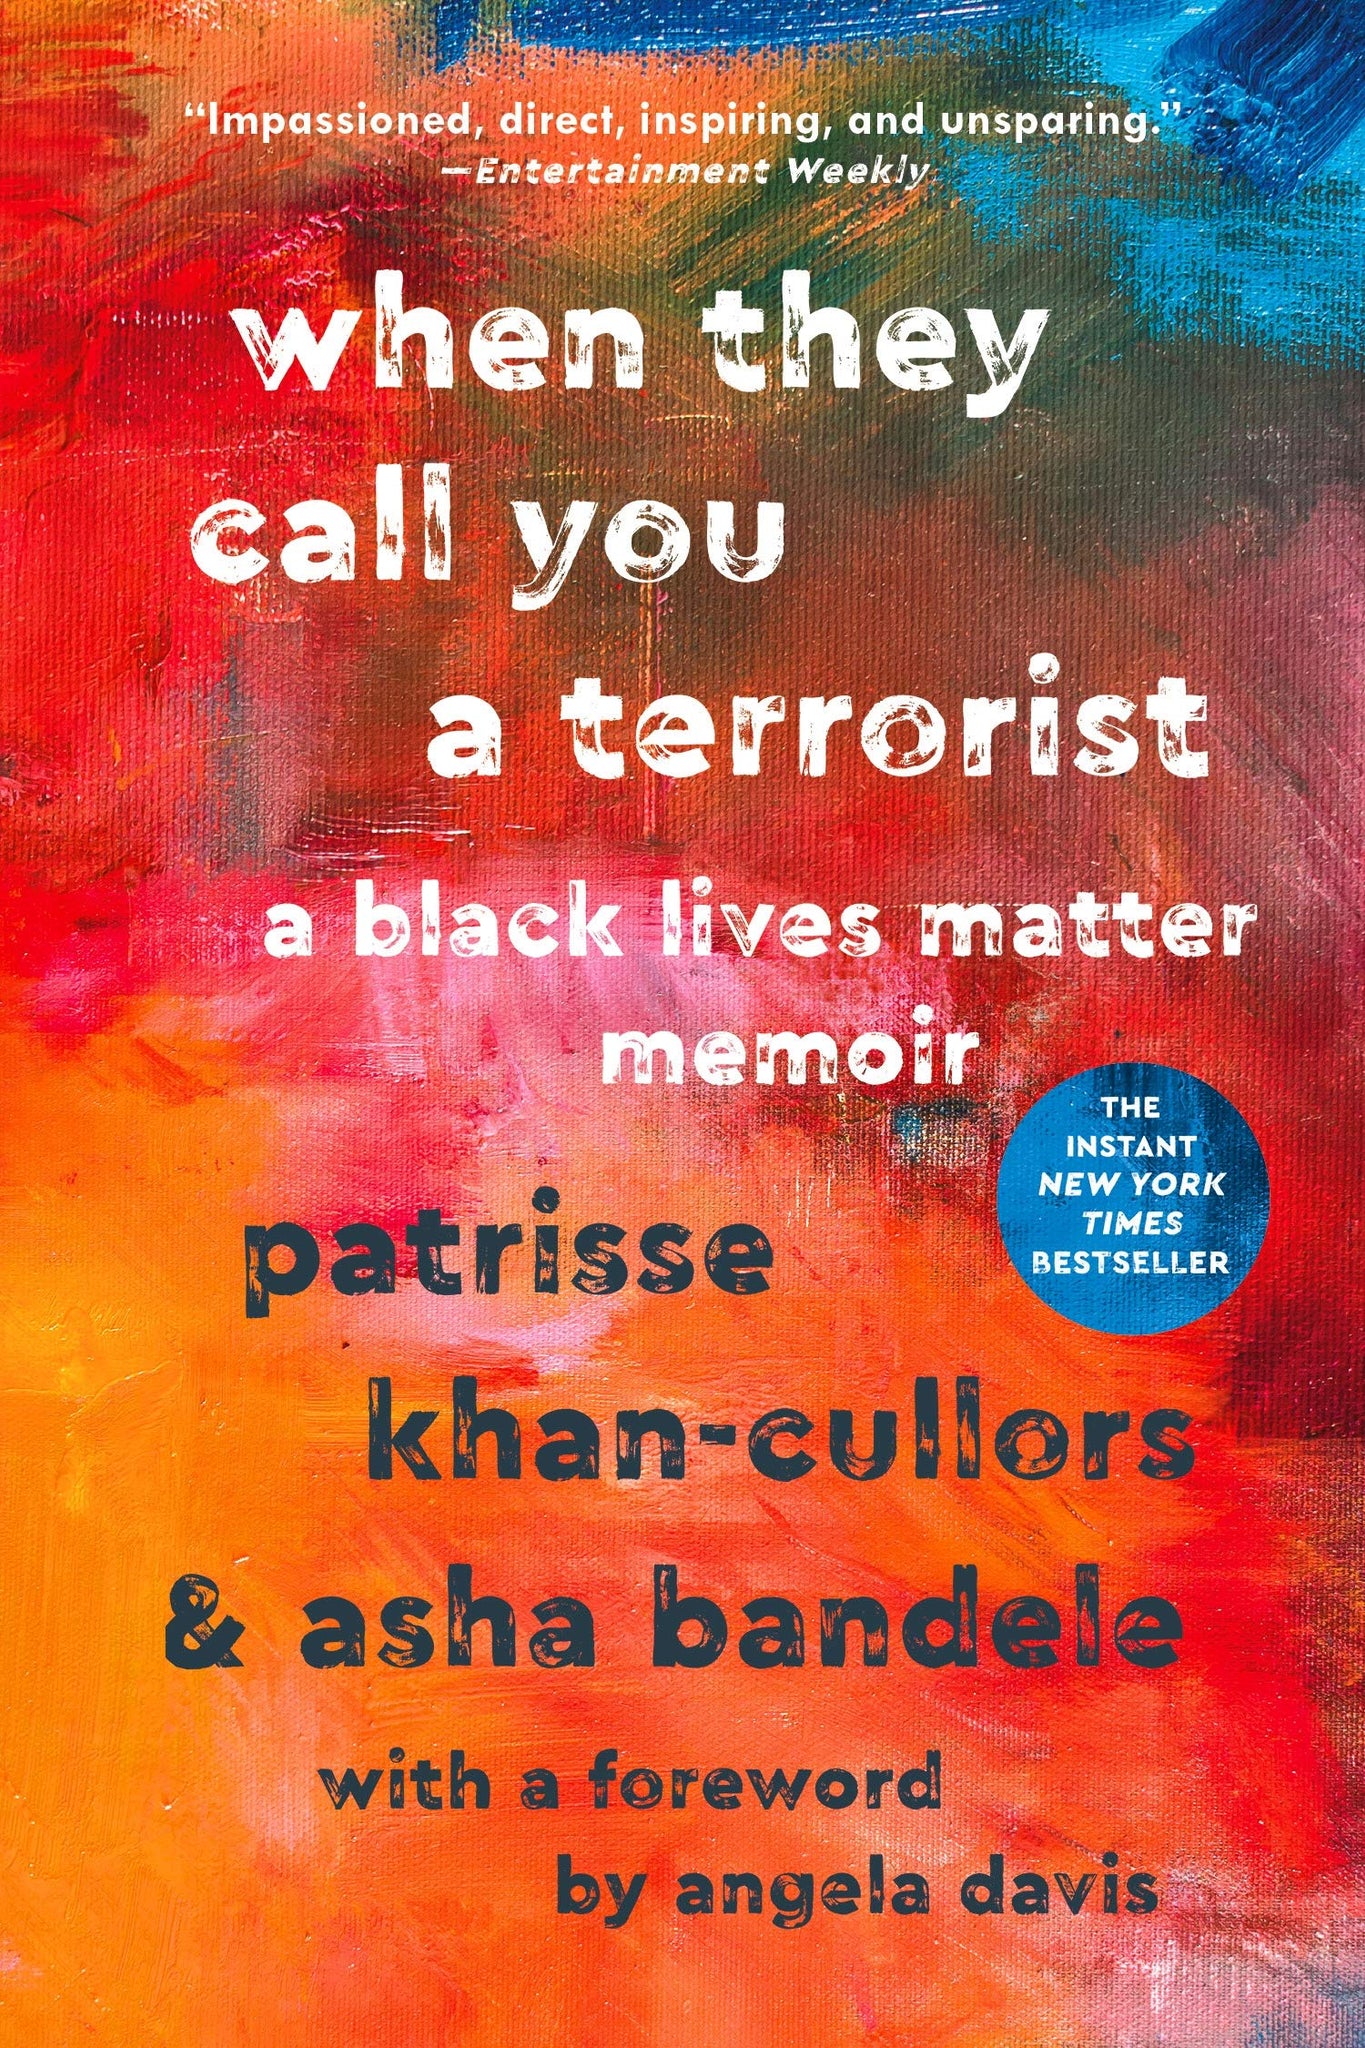 When They Call You a Terrorist: A Black Lives Matter Memoir (Paperback)